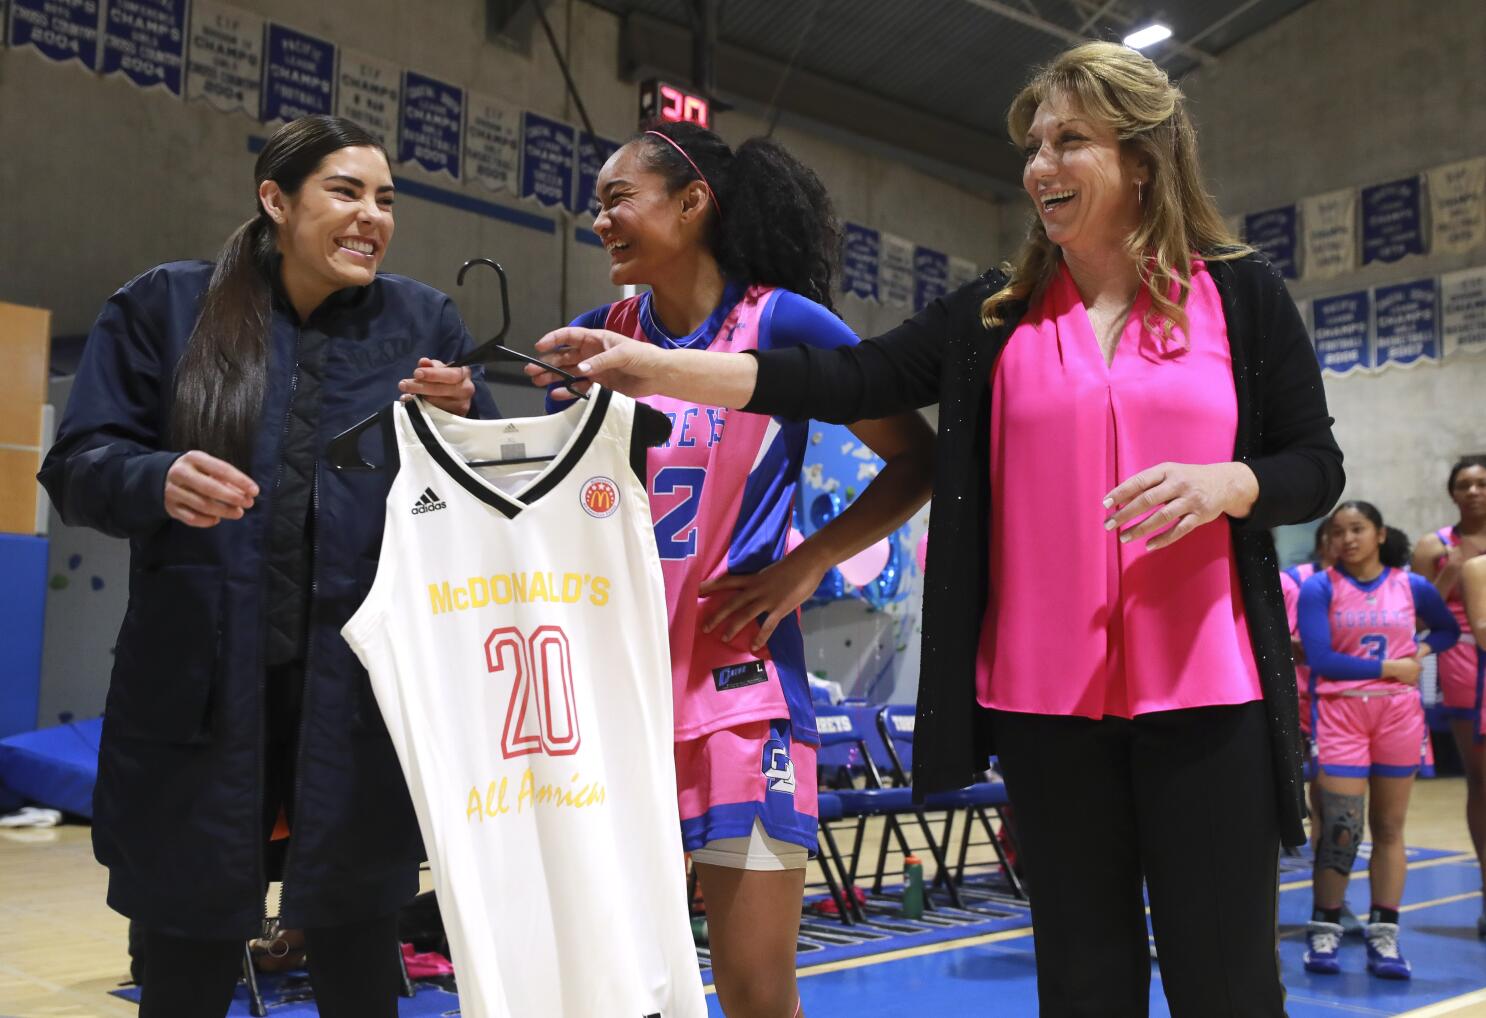 La Jolla Country Day advances in girls basketball regionals; other Torreys  teams fall - La Jolla Light